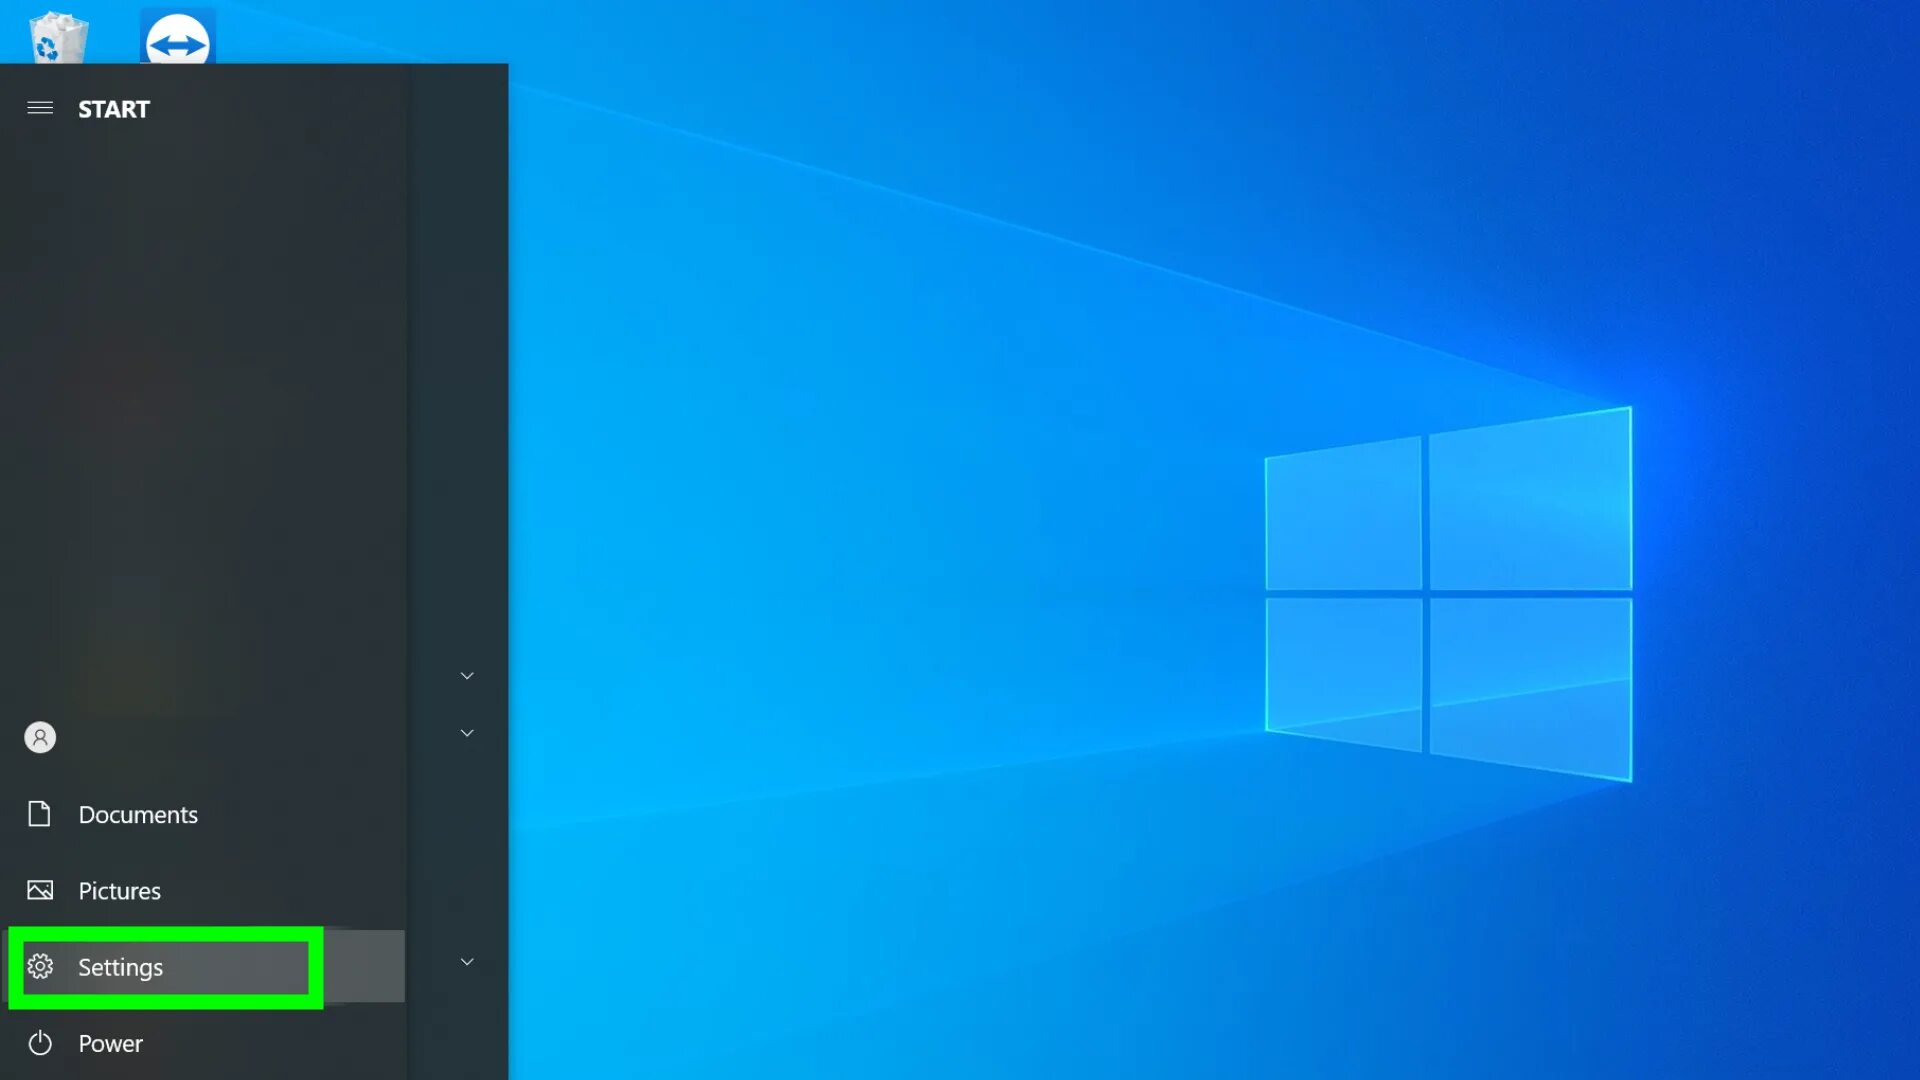 Производитель windows 10. Windows 10 Enterprise 20h2. Win 10 Pro 20h2. Ноутбук на виндовс 10 64 бит. • ОС Microsoft Windows 10 Pro.